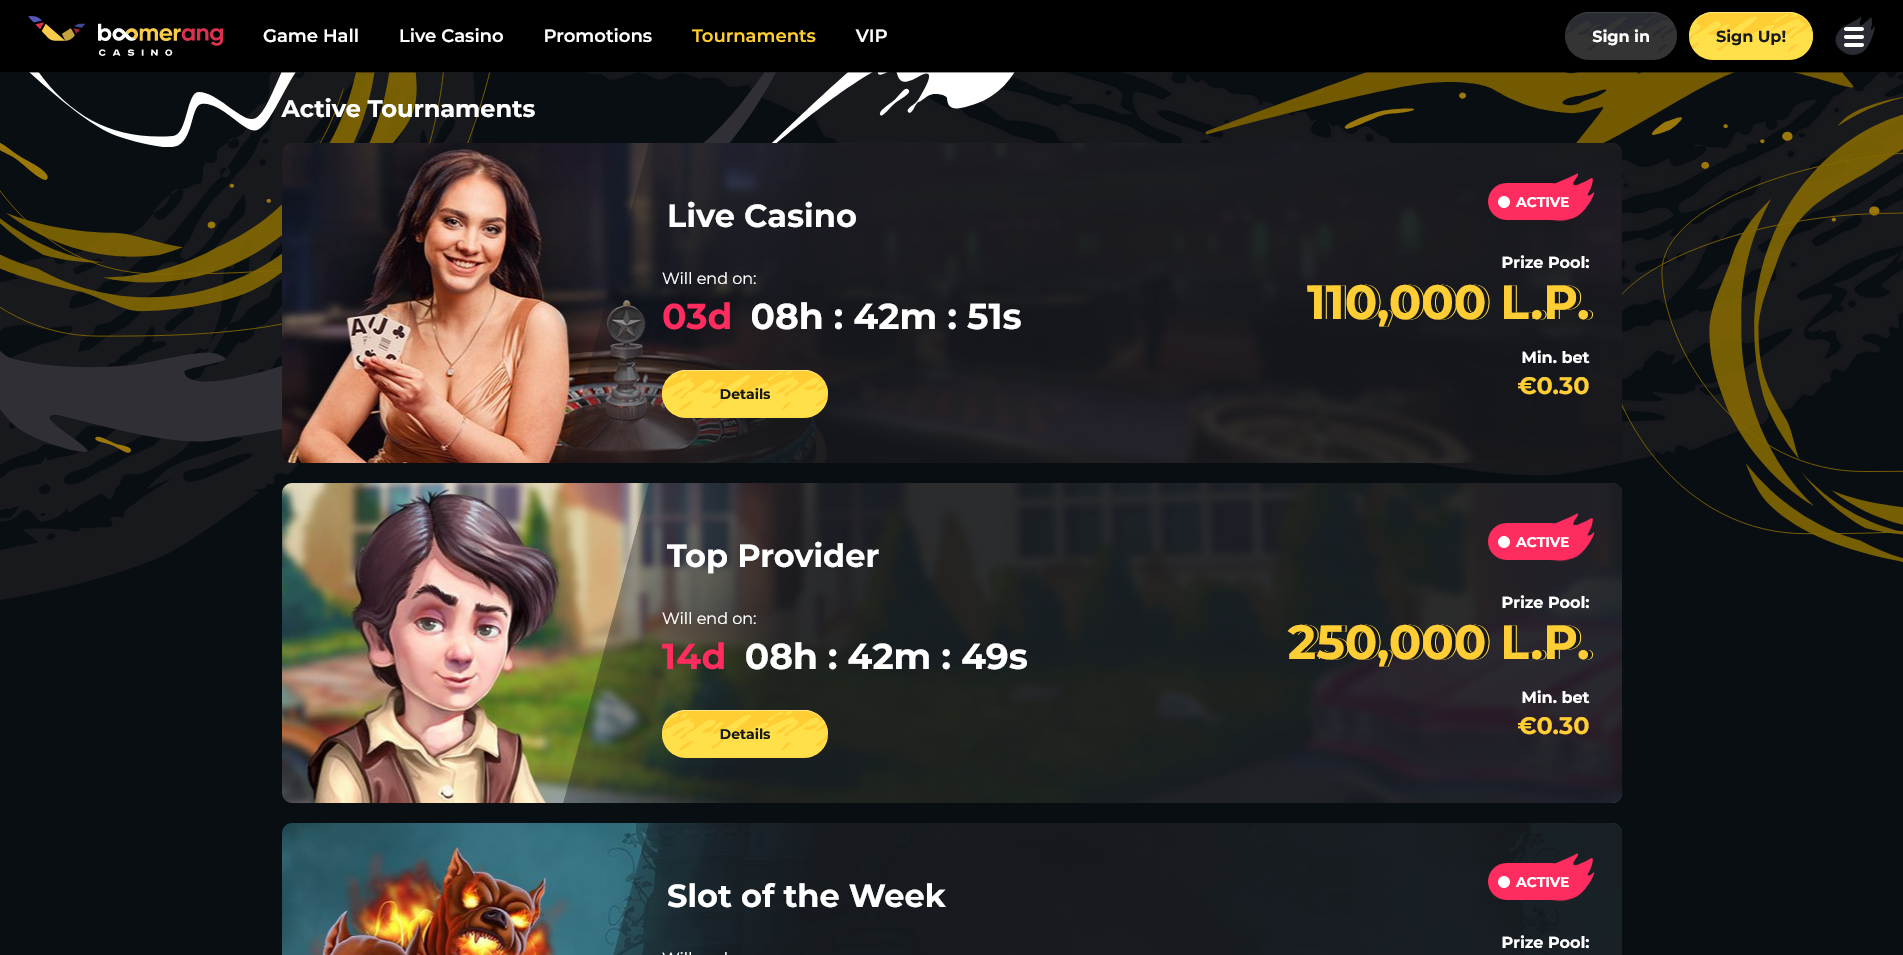 Screenshot of Tournaments page on Boomerang casino site